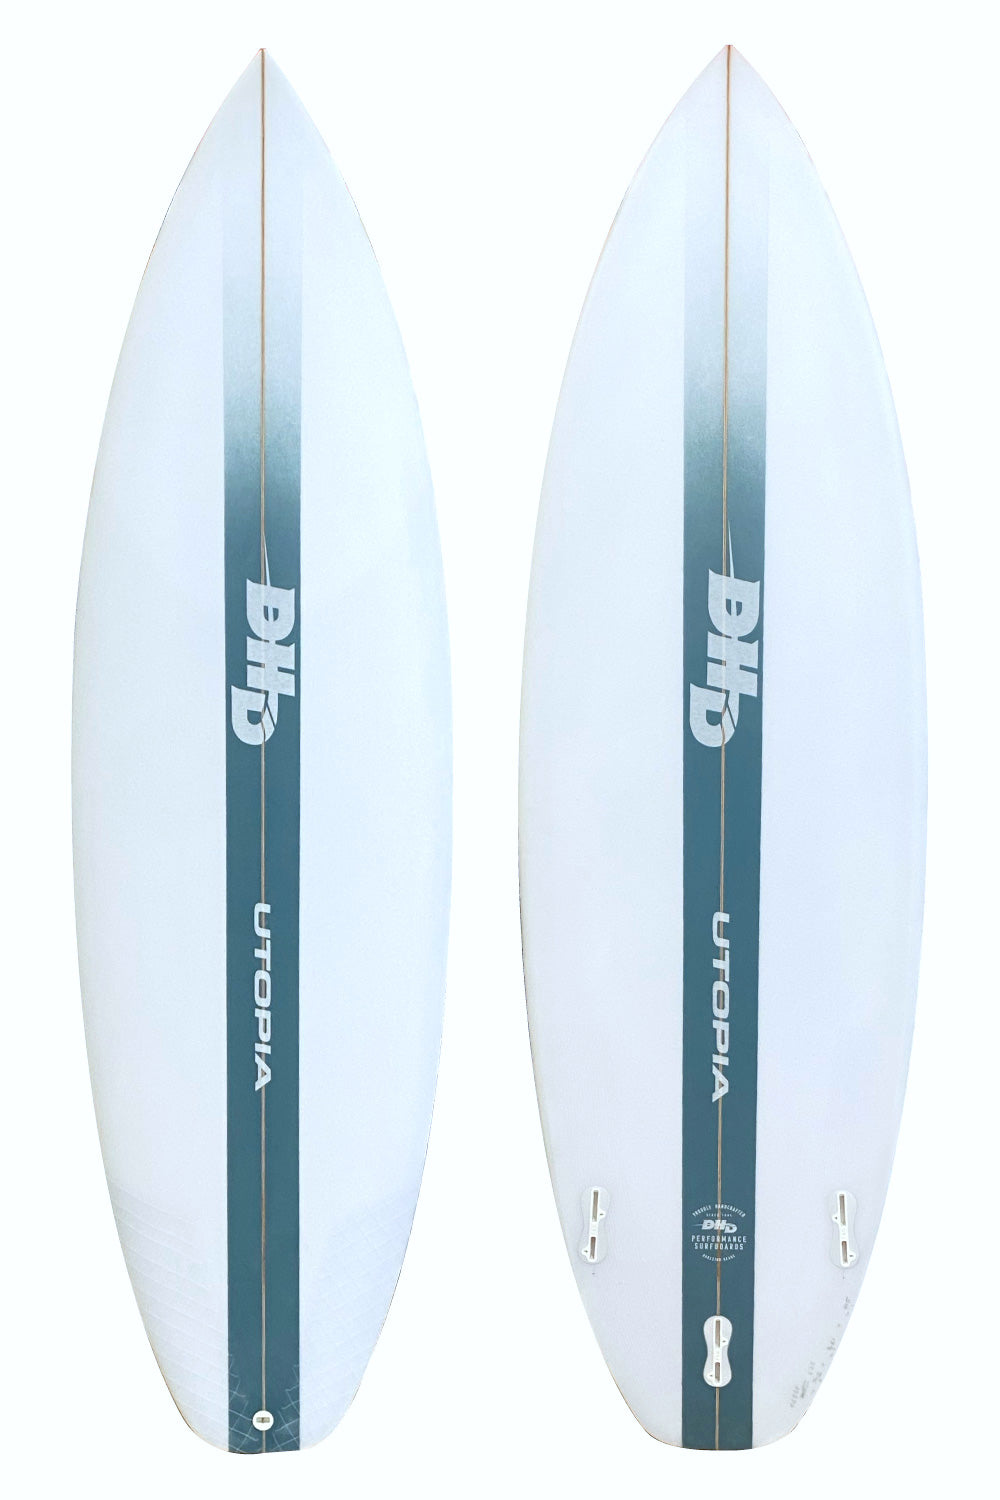 DHD Utopia Surfboard Teal Spray